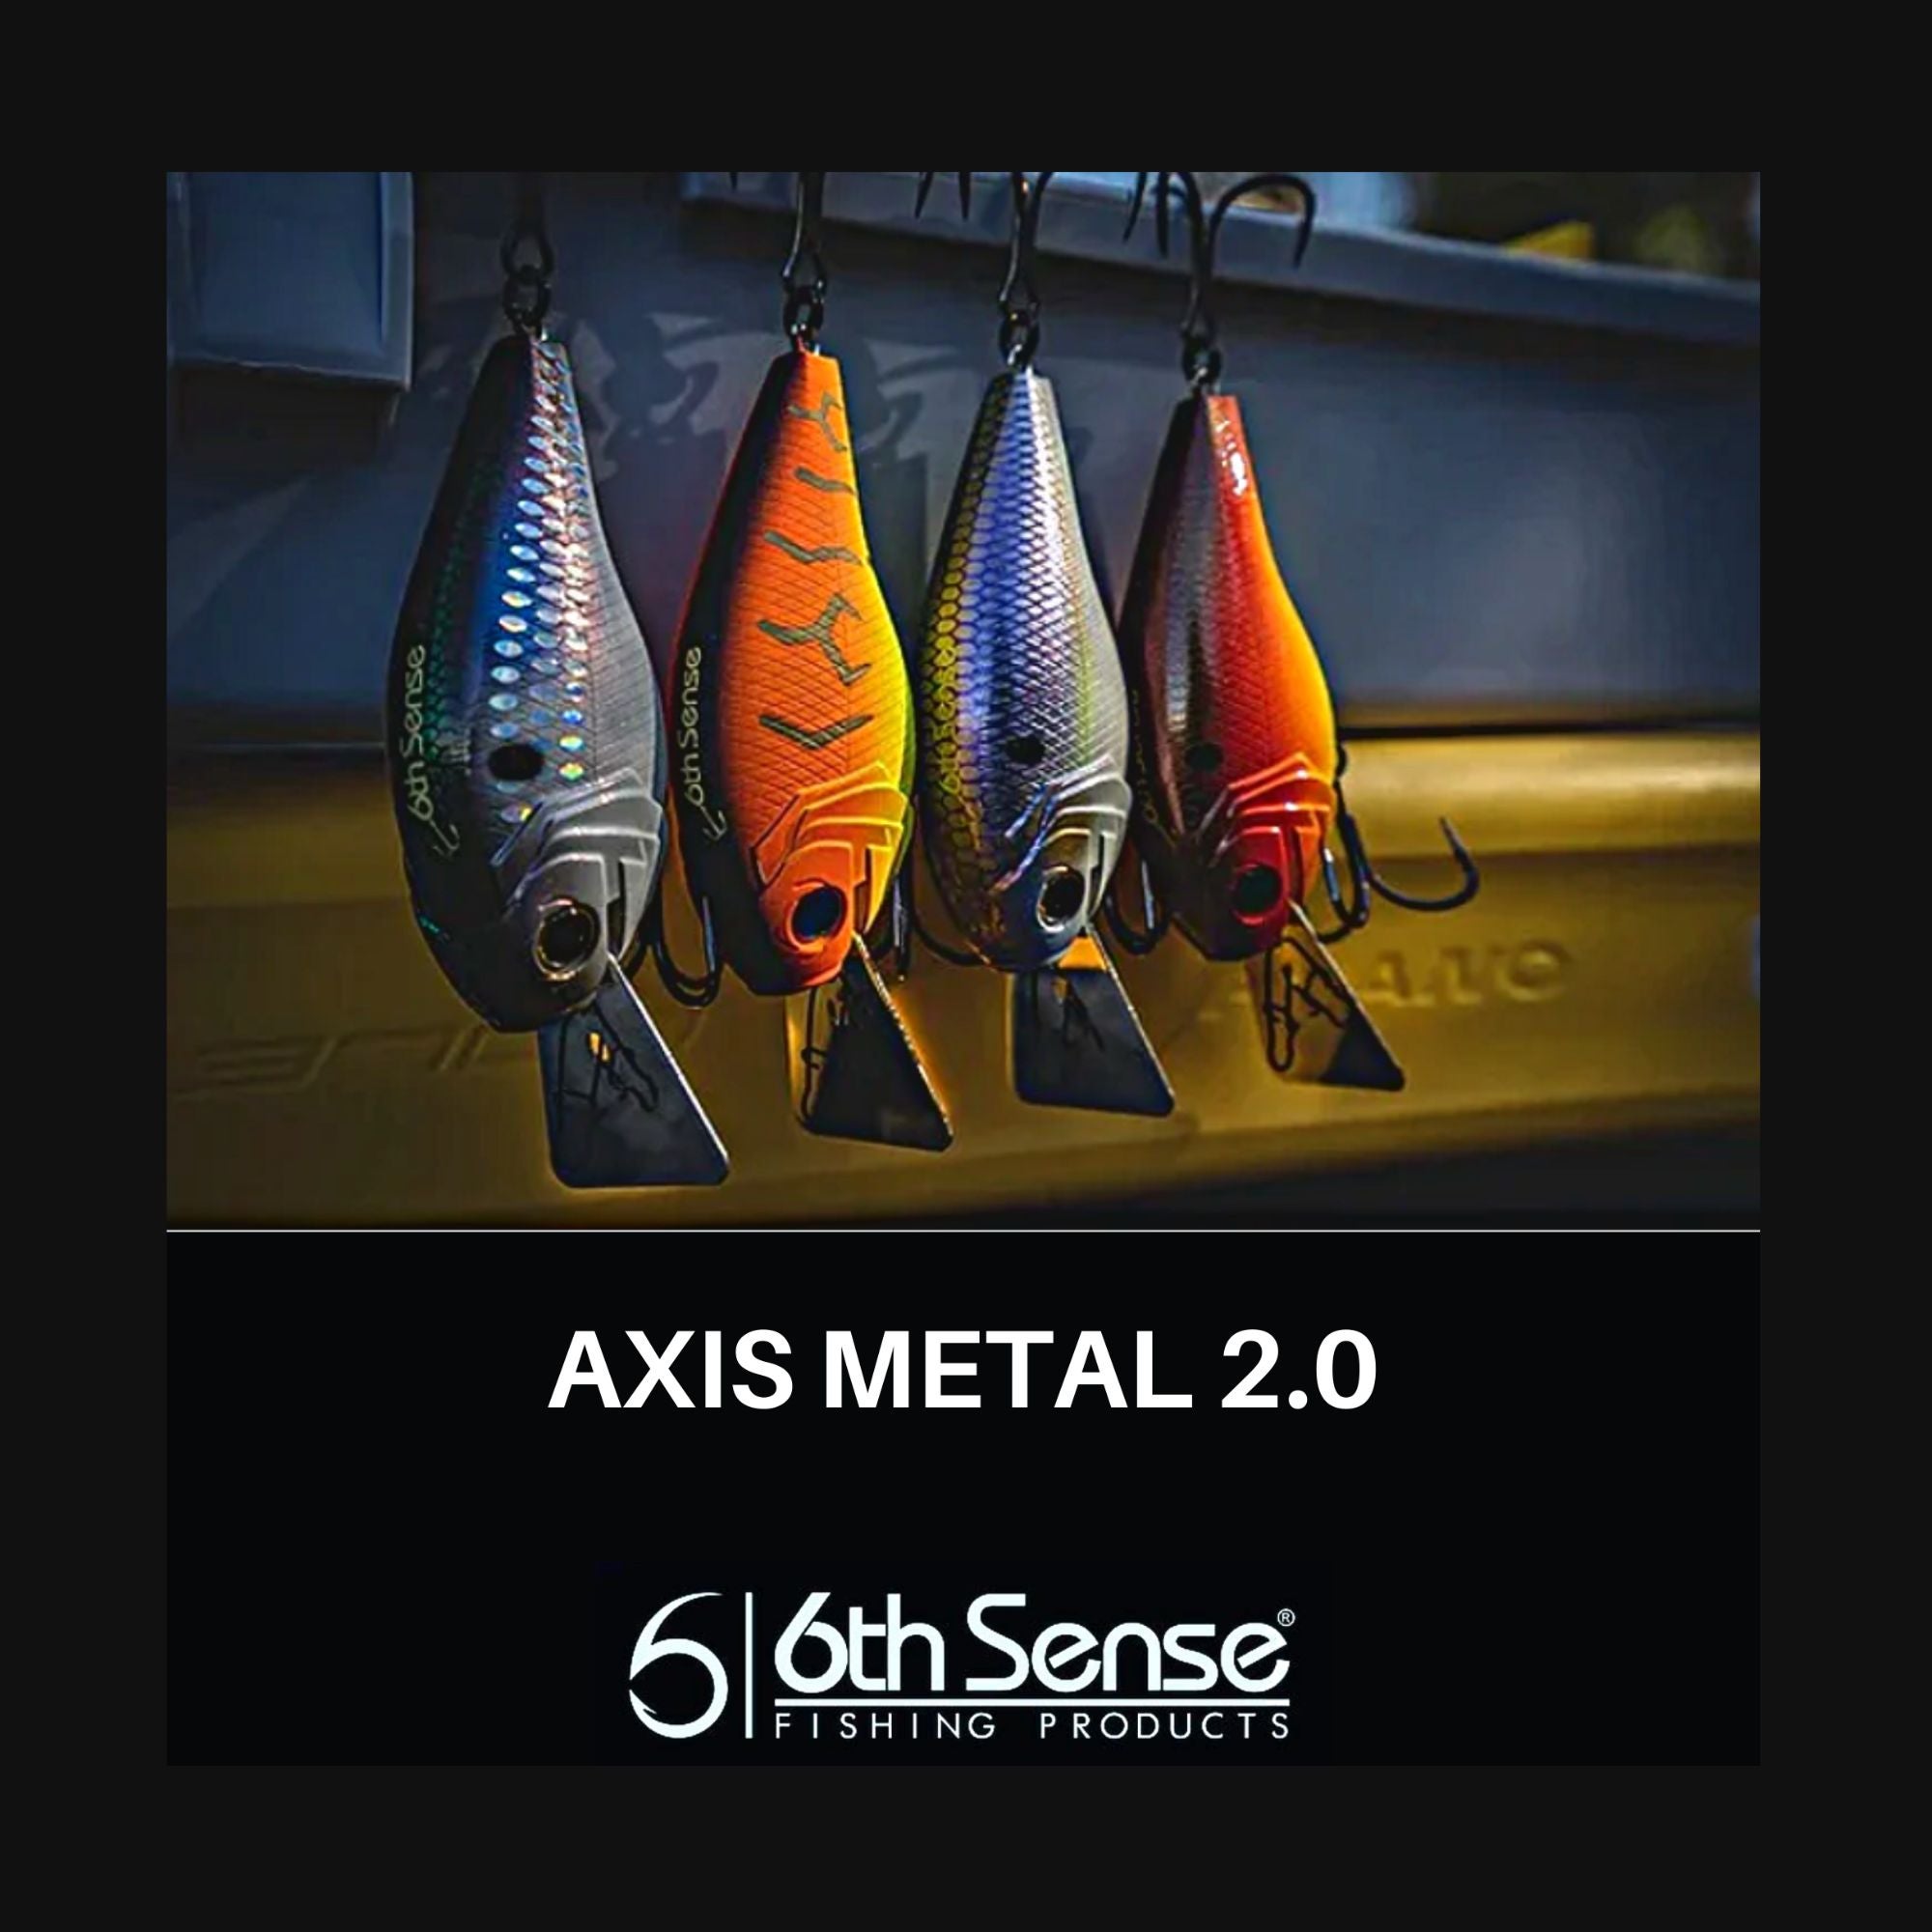 Axis Metal 2.0, 6th Sense Fishing, Crankbait, Lures, Bait, Store